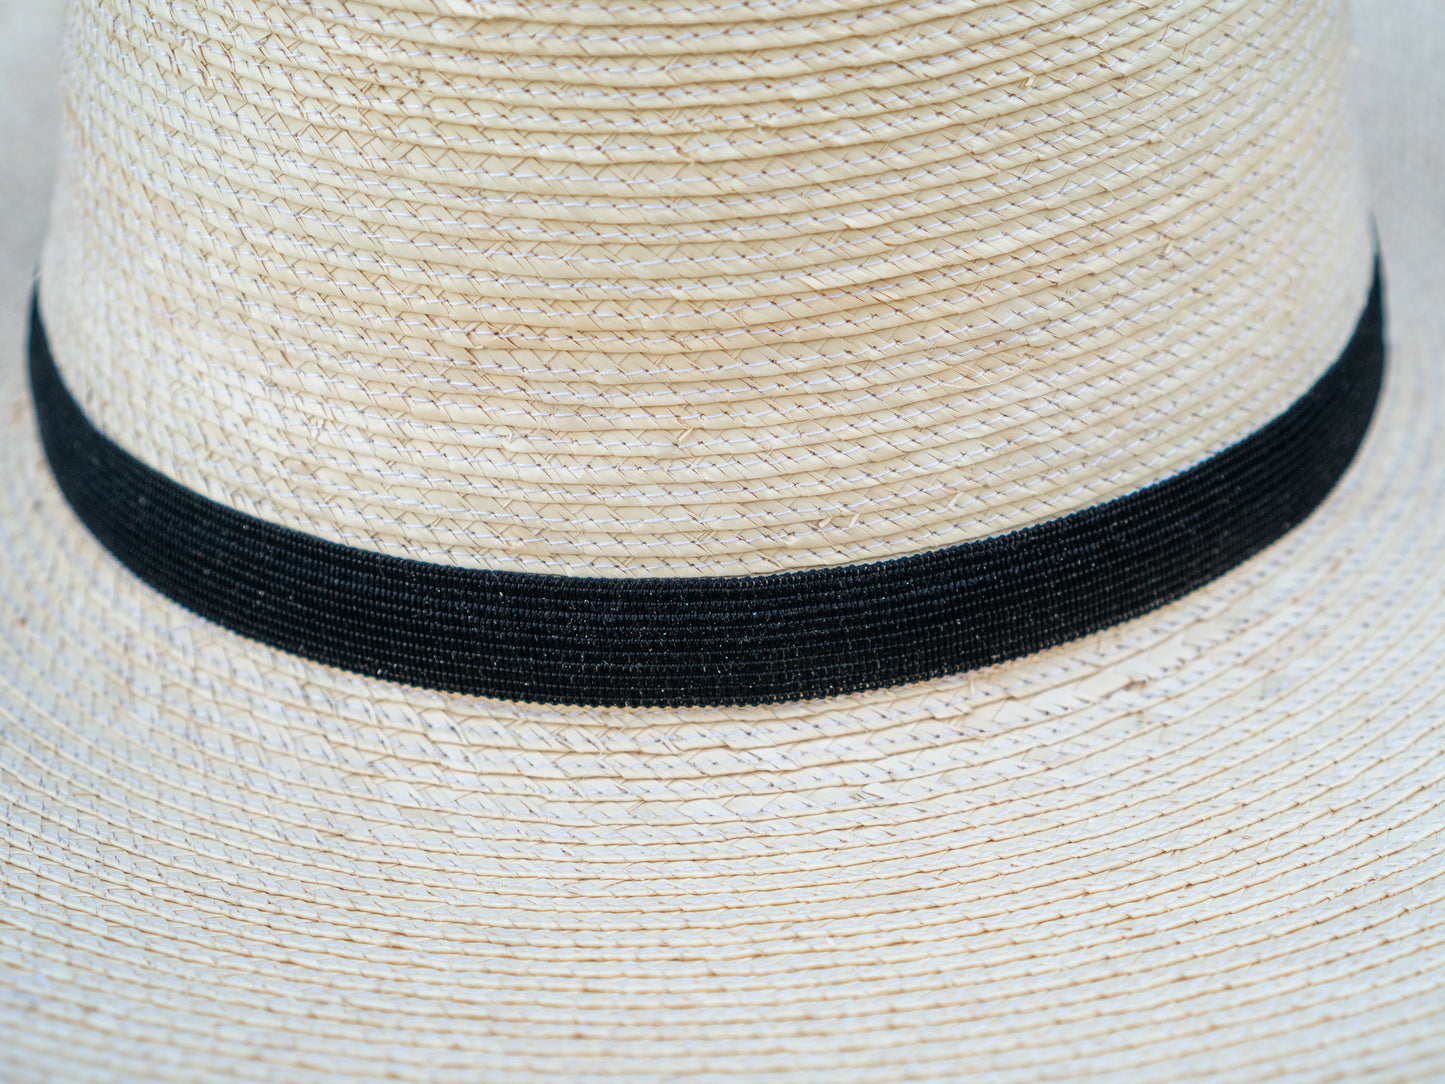 SunBody Hats Guatemala Palm Leaf Hat Open Crown Tan